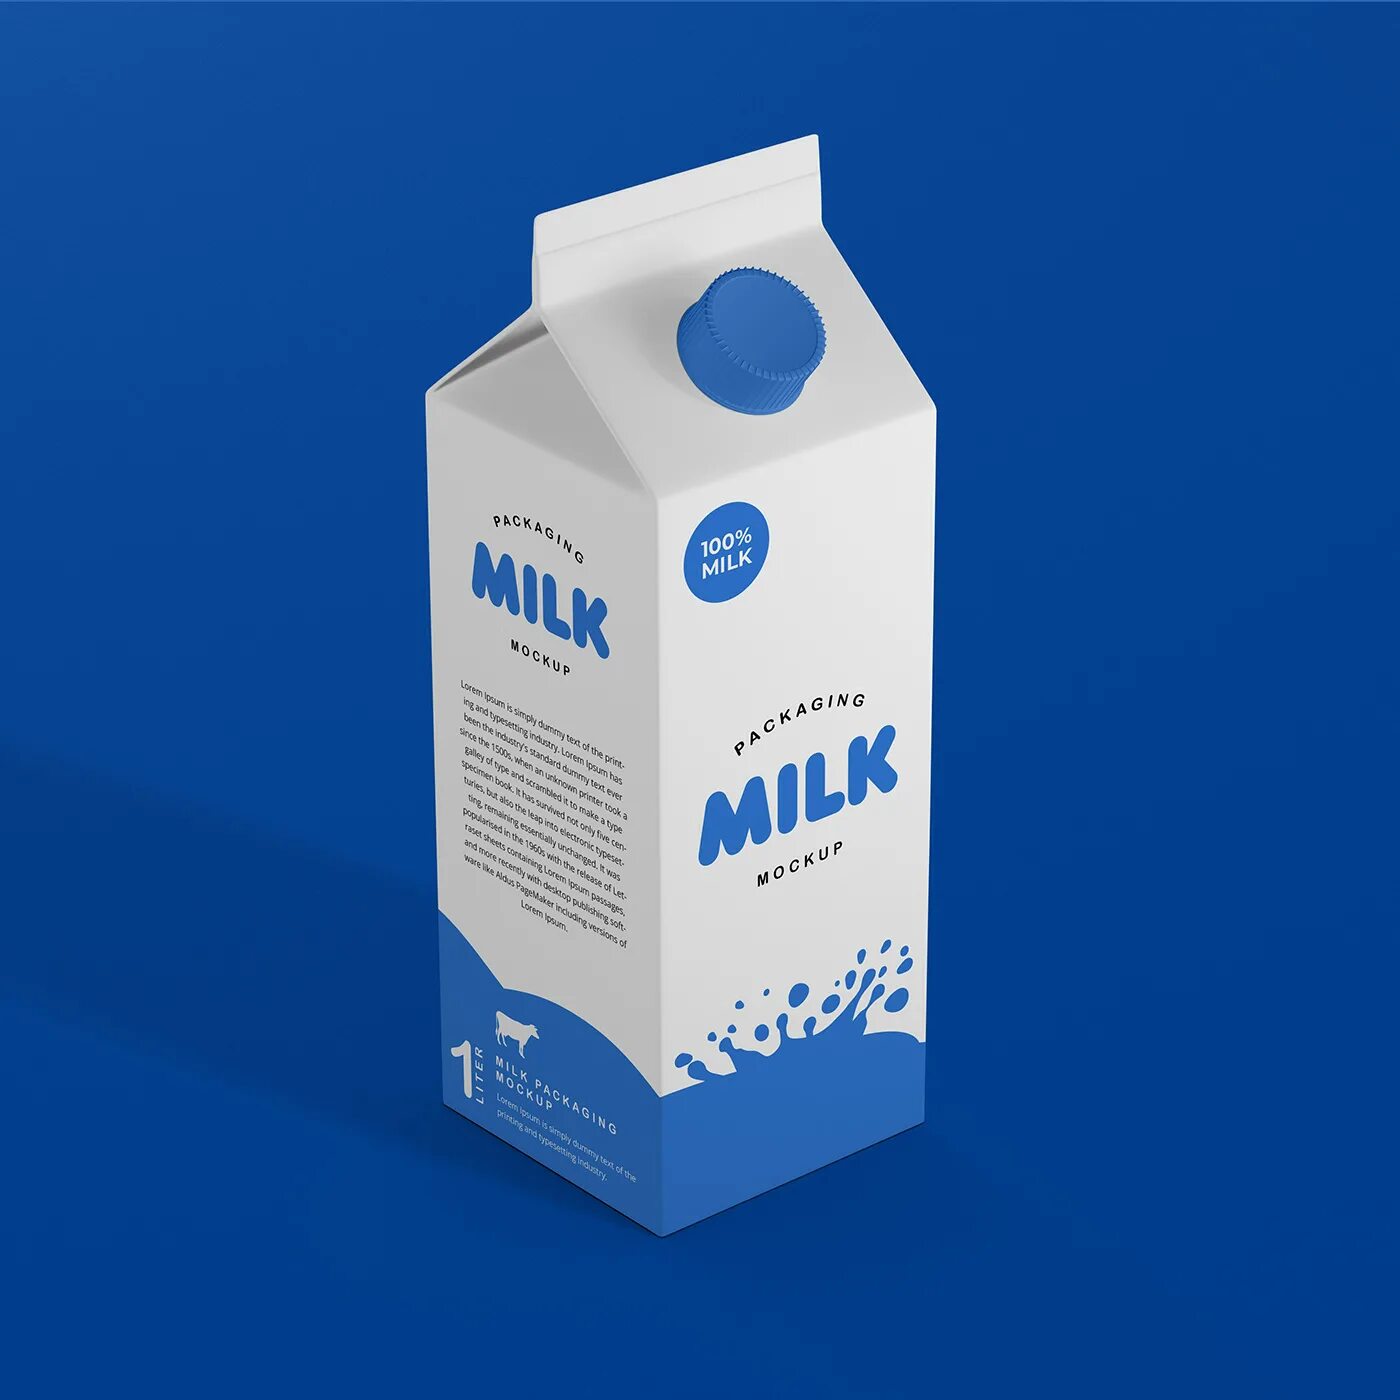 Пакеты тетра пак. Упаковка тетра пак для молока. Молоко тетра пак упаковка мокап. Молоко в упаковке тетра пак. Упаковка Пюр-пак для молочной продукции.